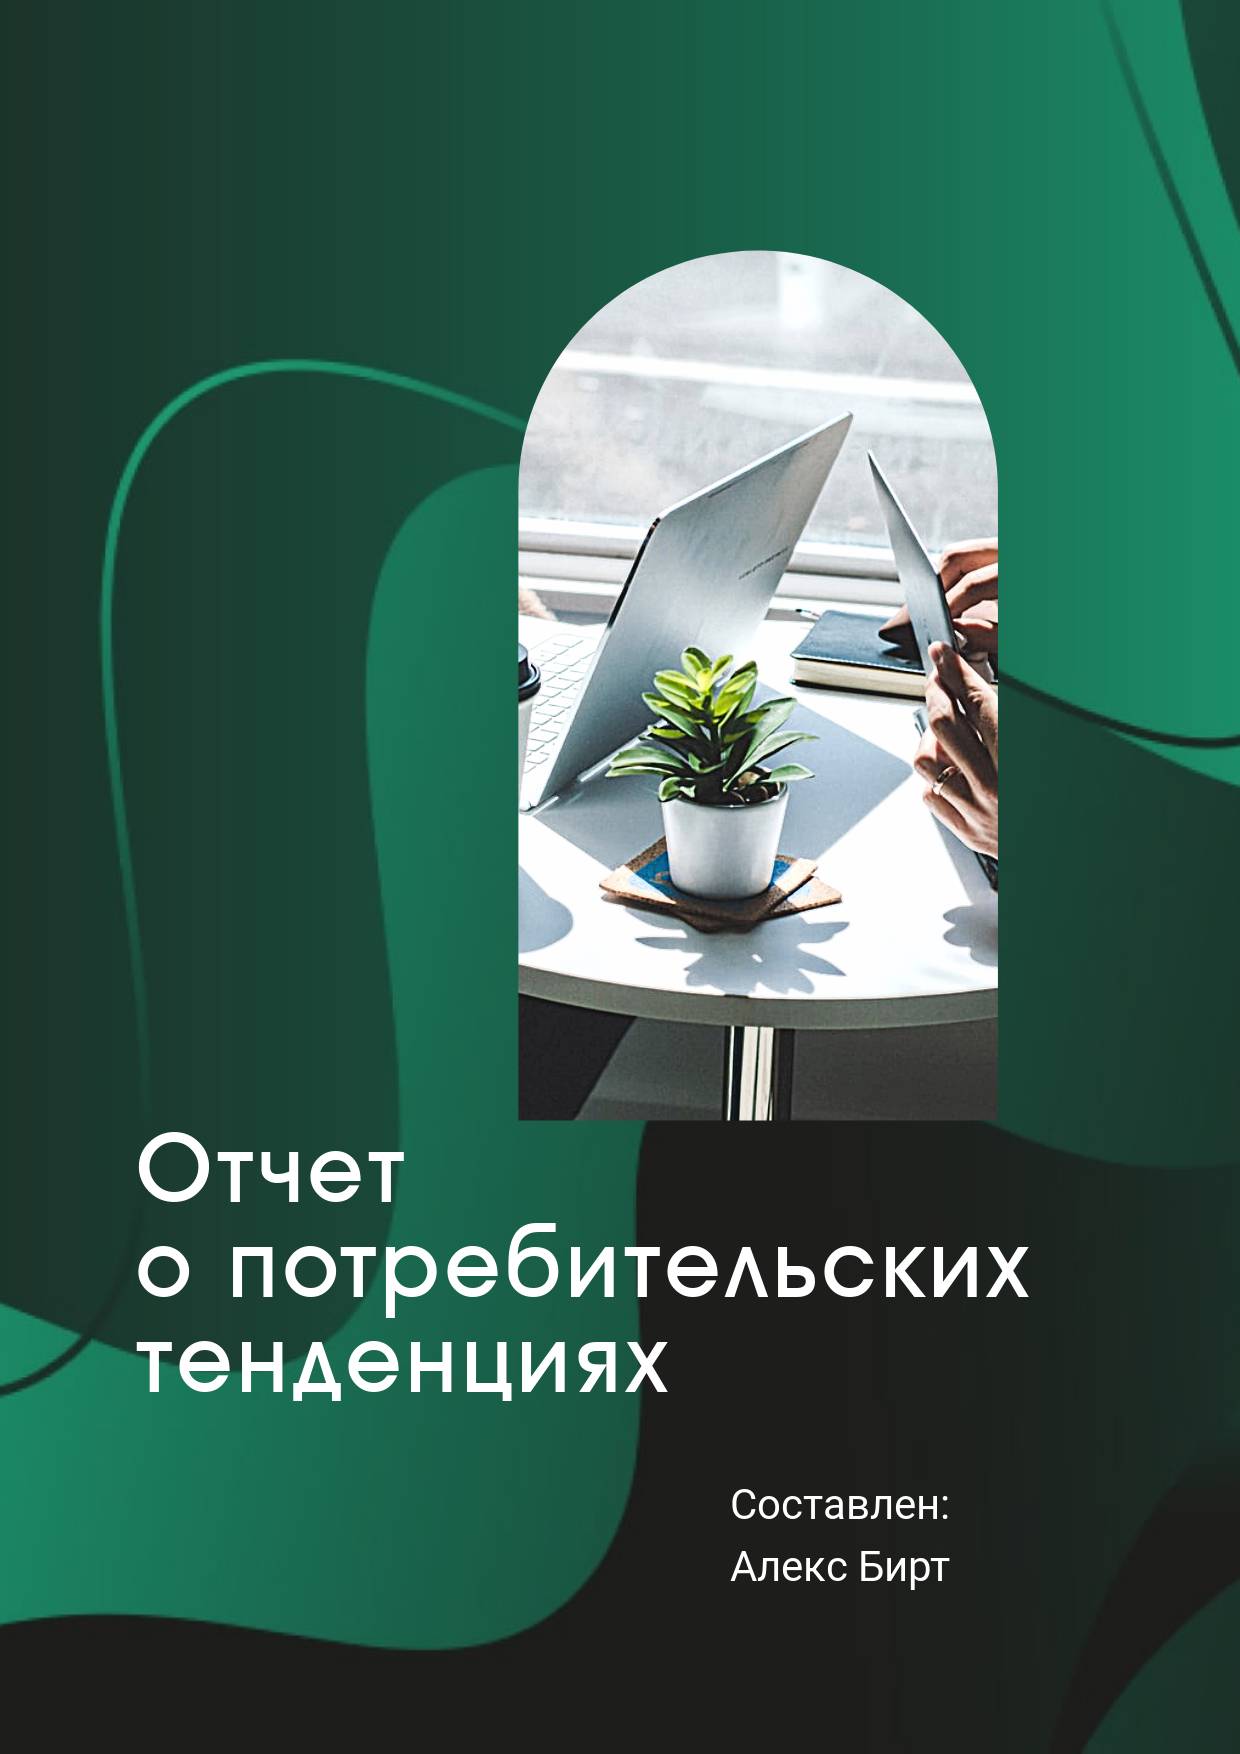 Изумрудно-зеленая обложка для отчета с разводами на фоне и местом для фото в форме арки